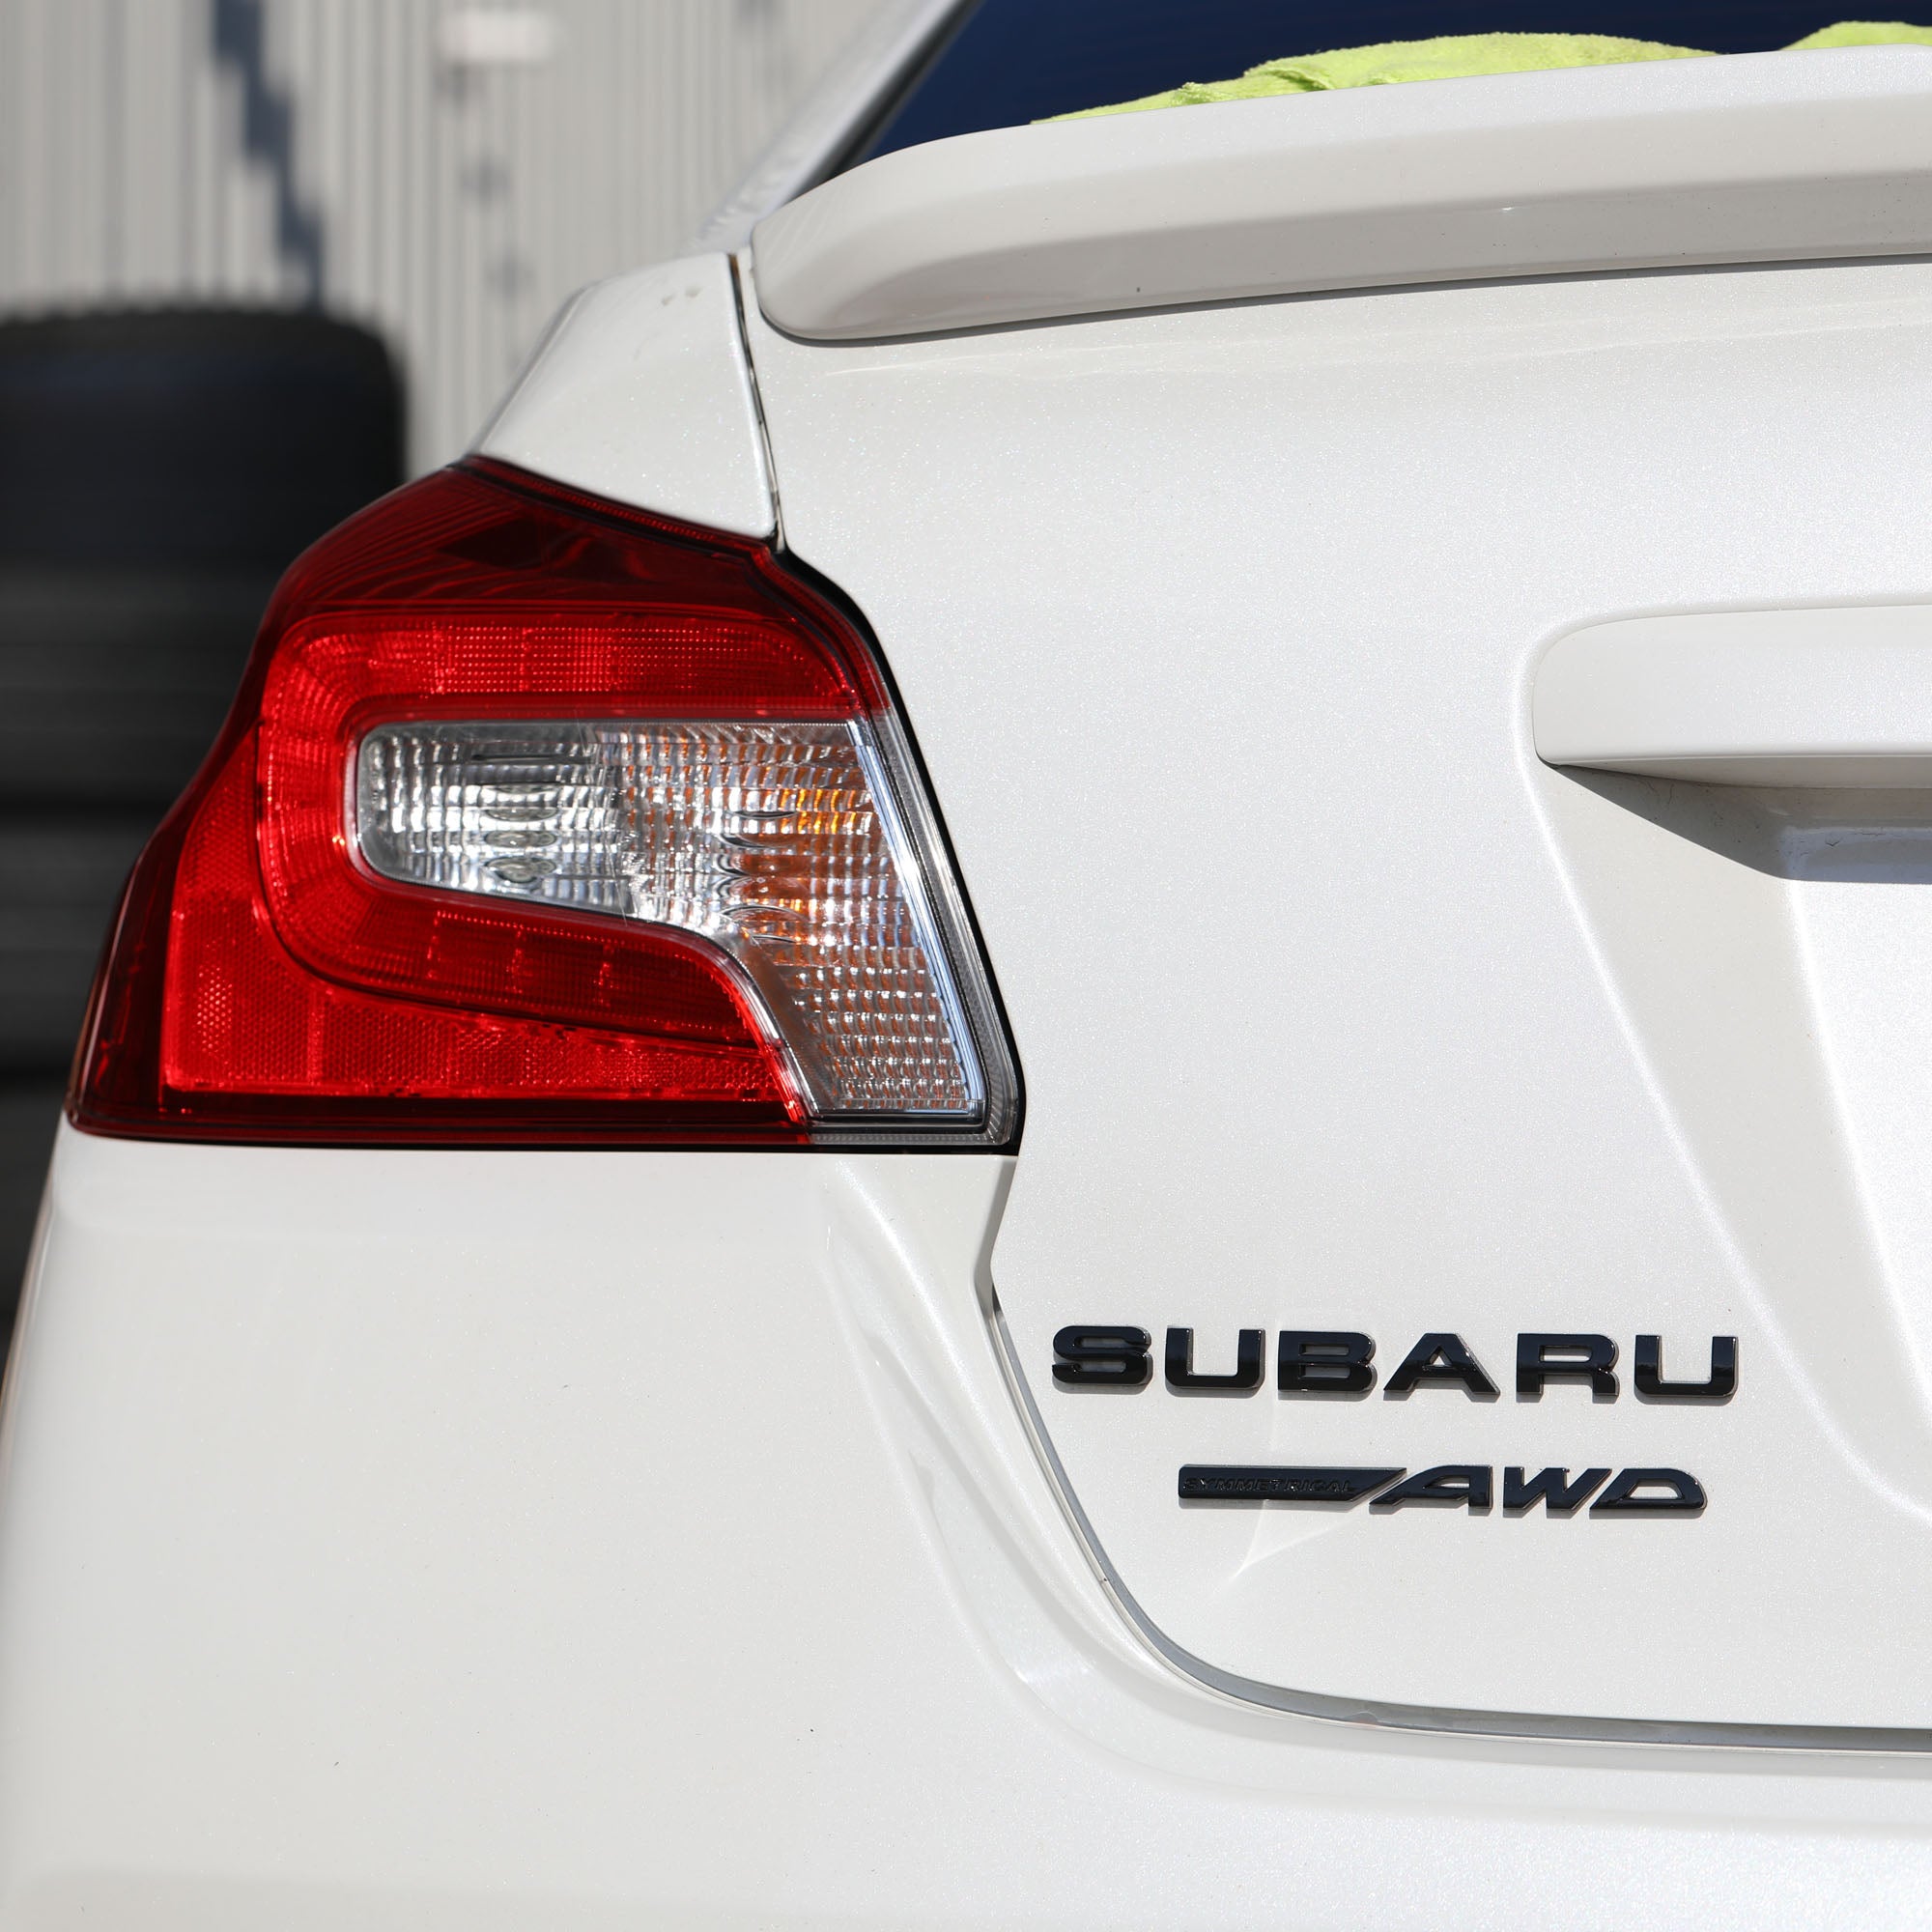 Subaru Symmetrical Awd Badge Black 15 Wrx Sti Fastwrx Com